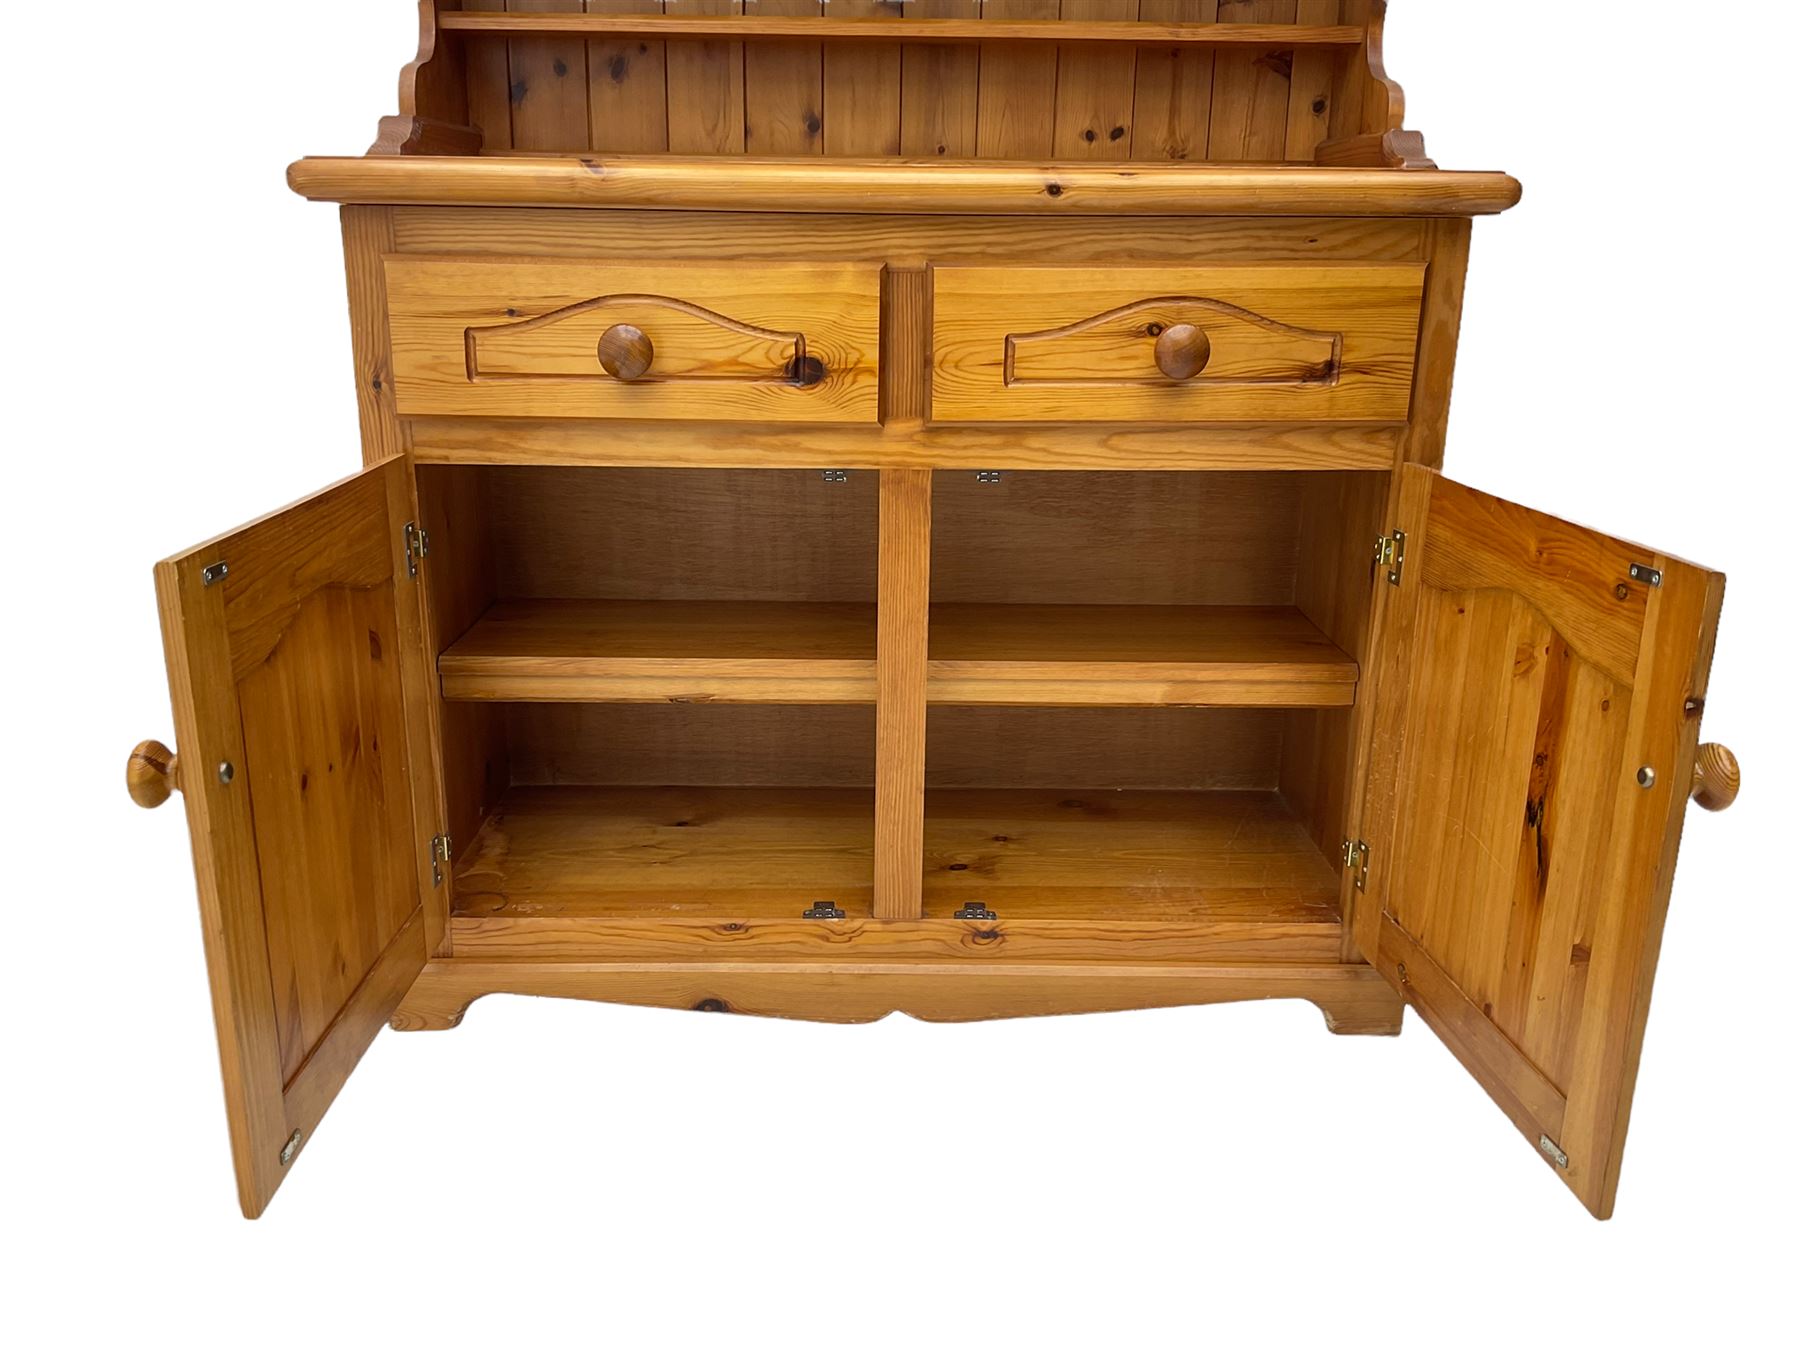 Solid pine kitchen dresser - Image 6 of 6